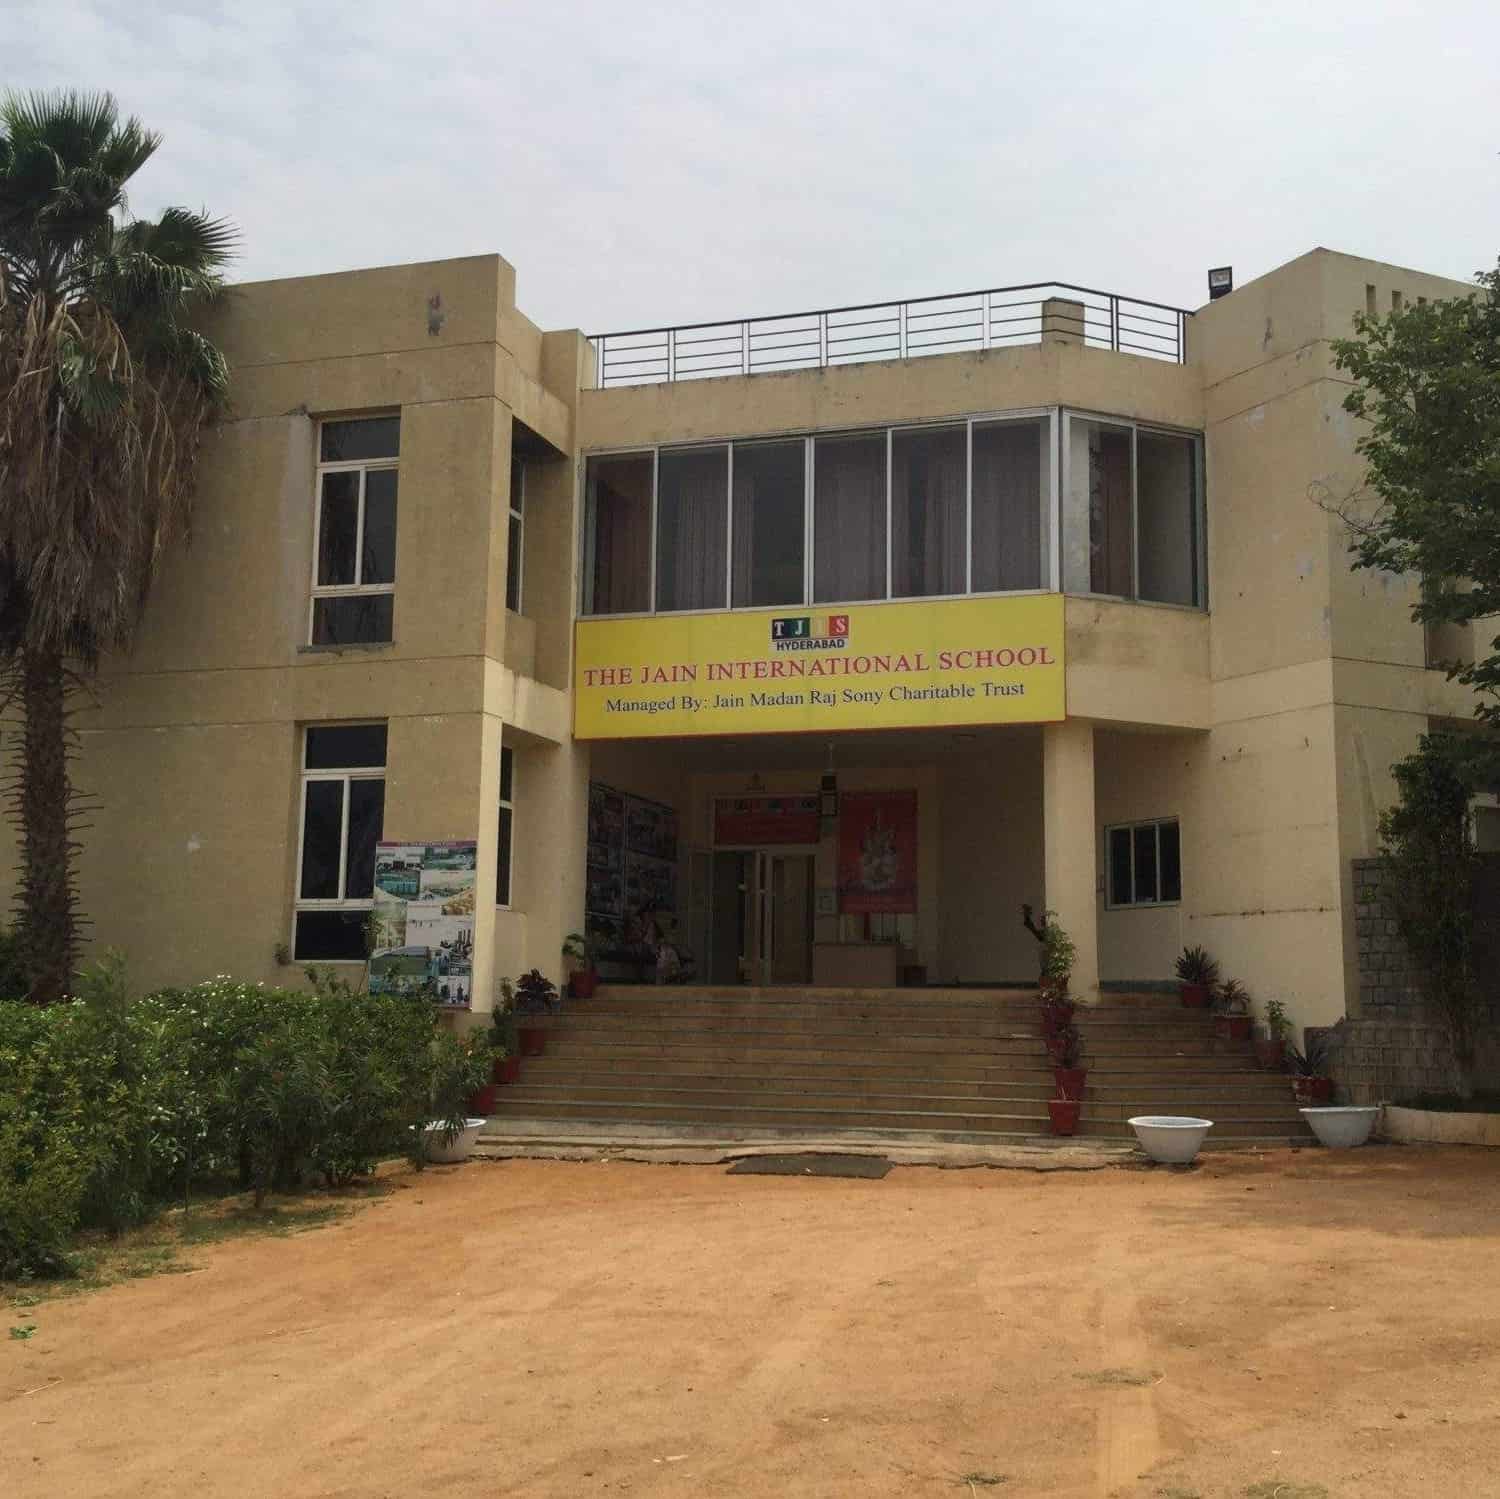 The Jain International School